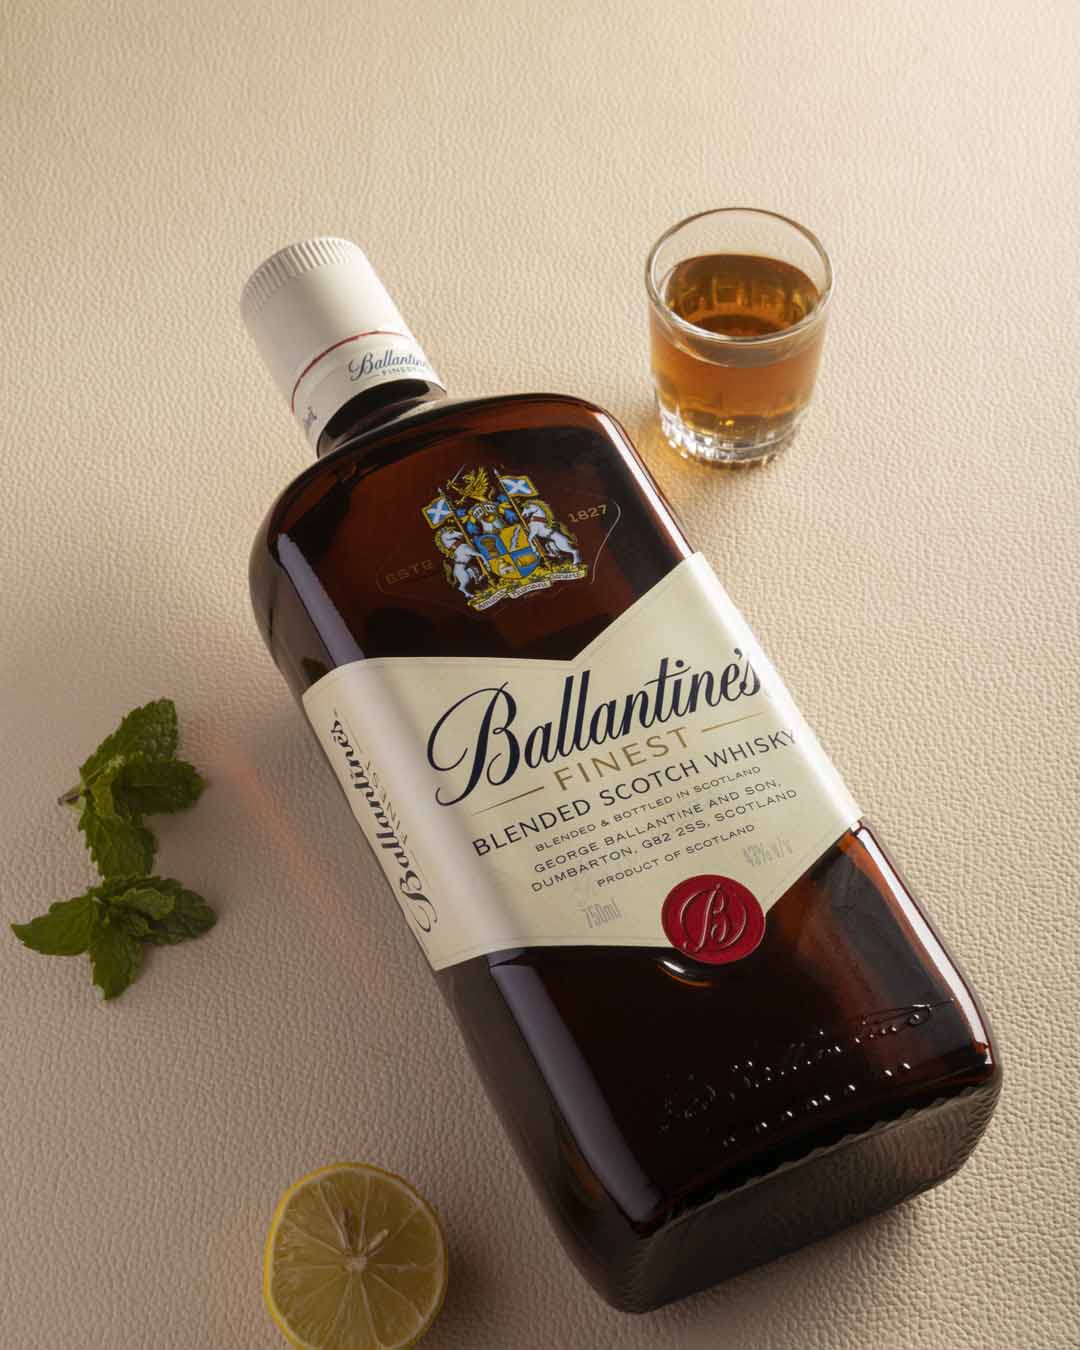 Product shot of Ballantine's scotch whisky